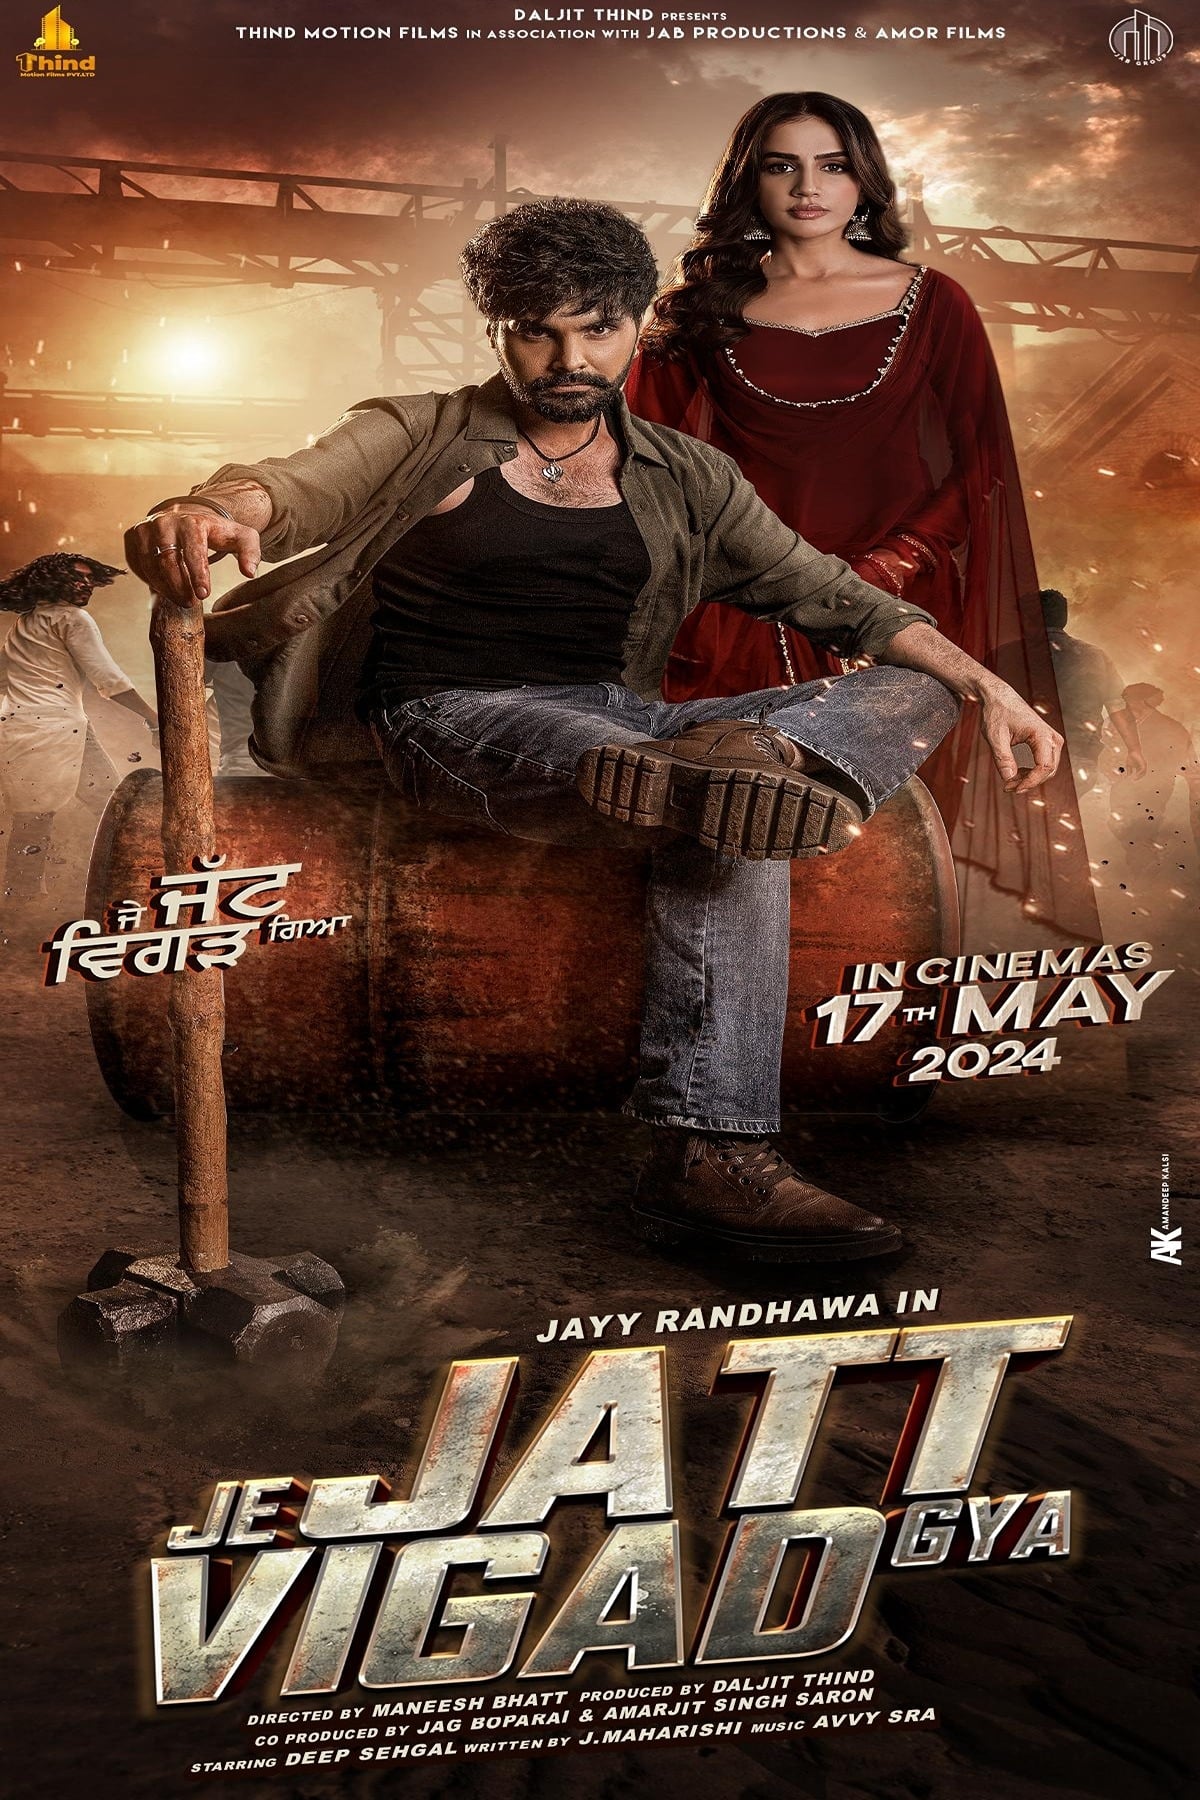 Poster for the movie "Je Jatt Vigad Gya"